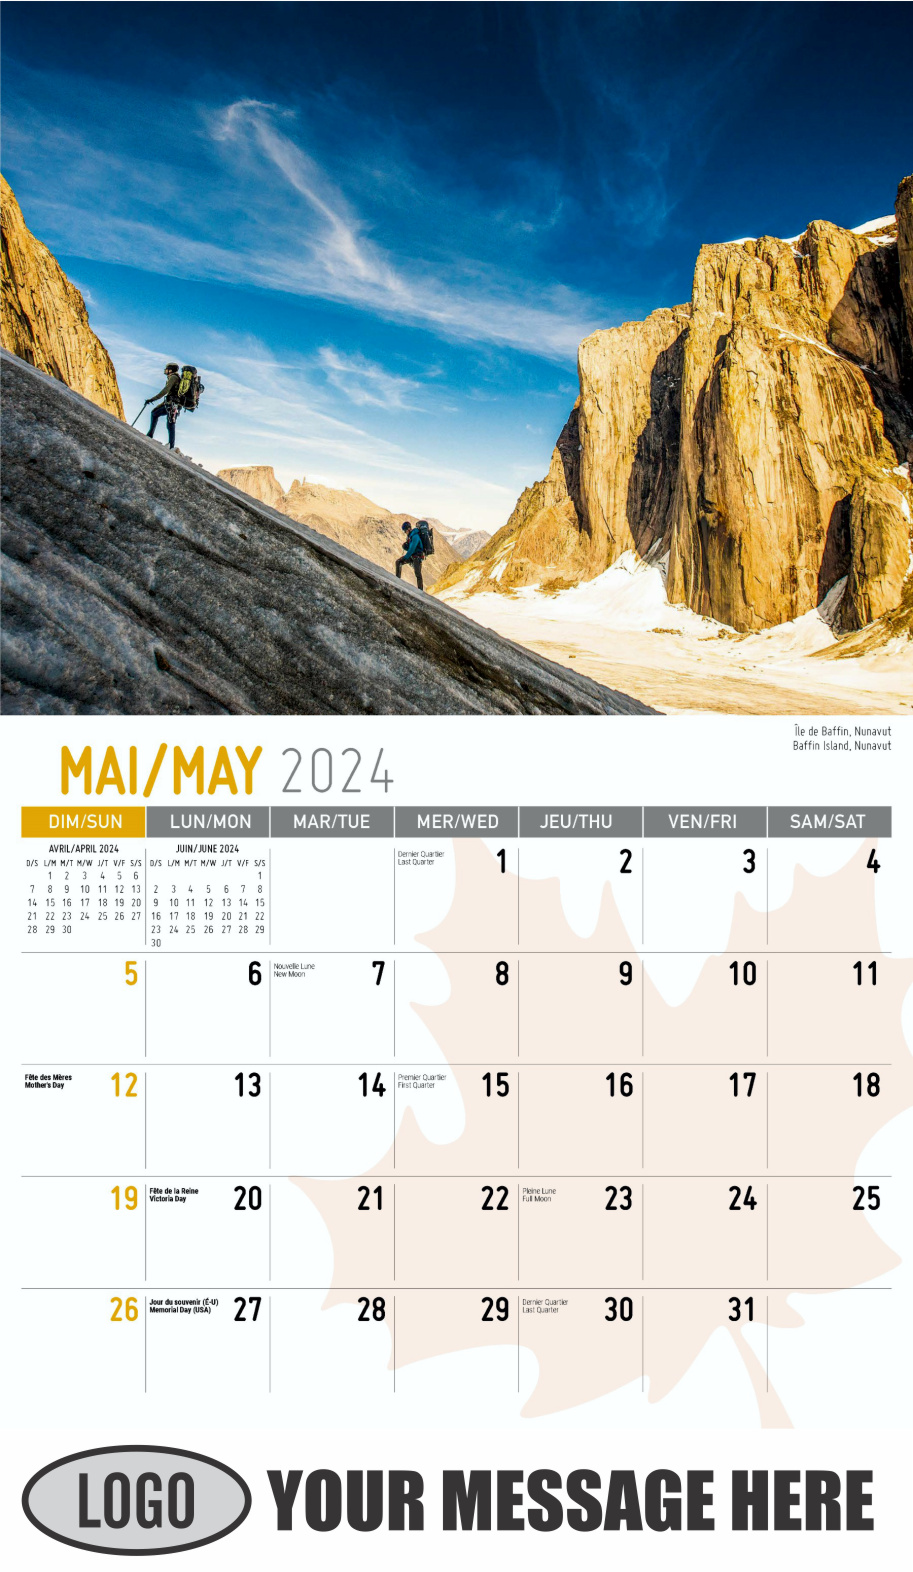 Scenes of Canada 2024 Bilingual Business Advertising Calendar - May